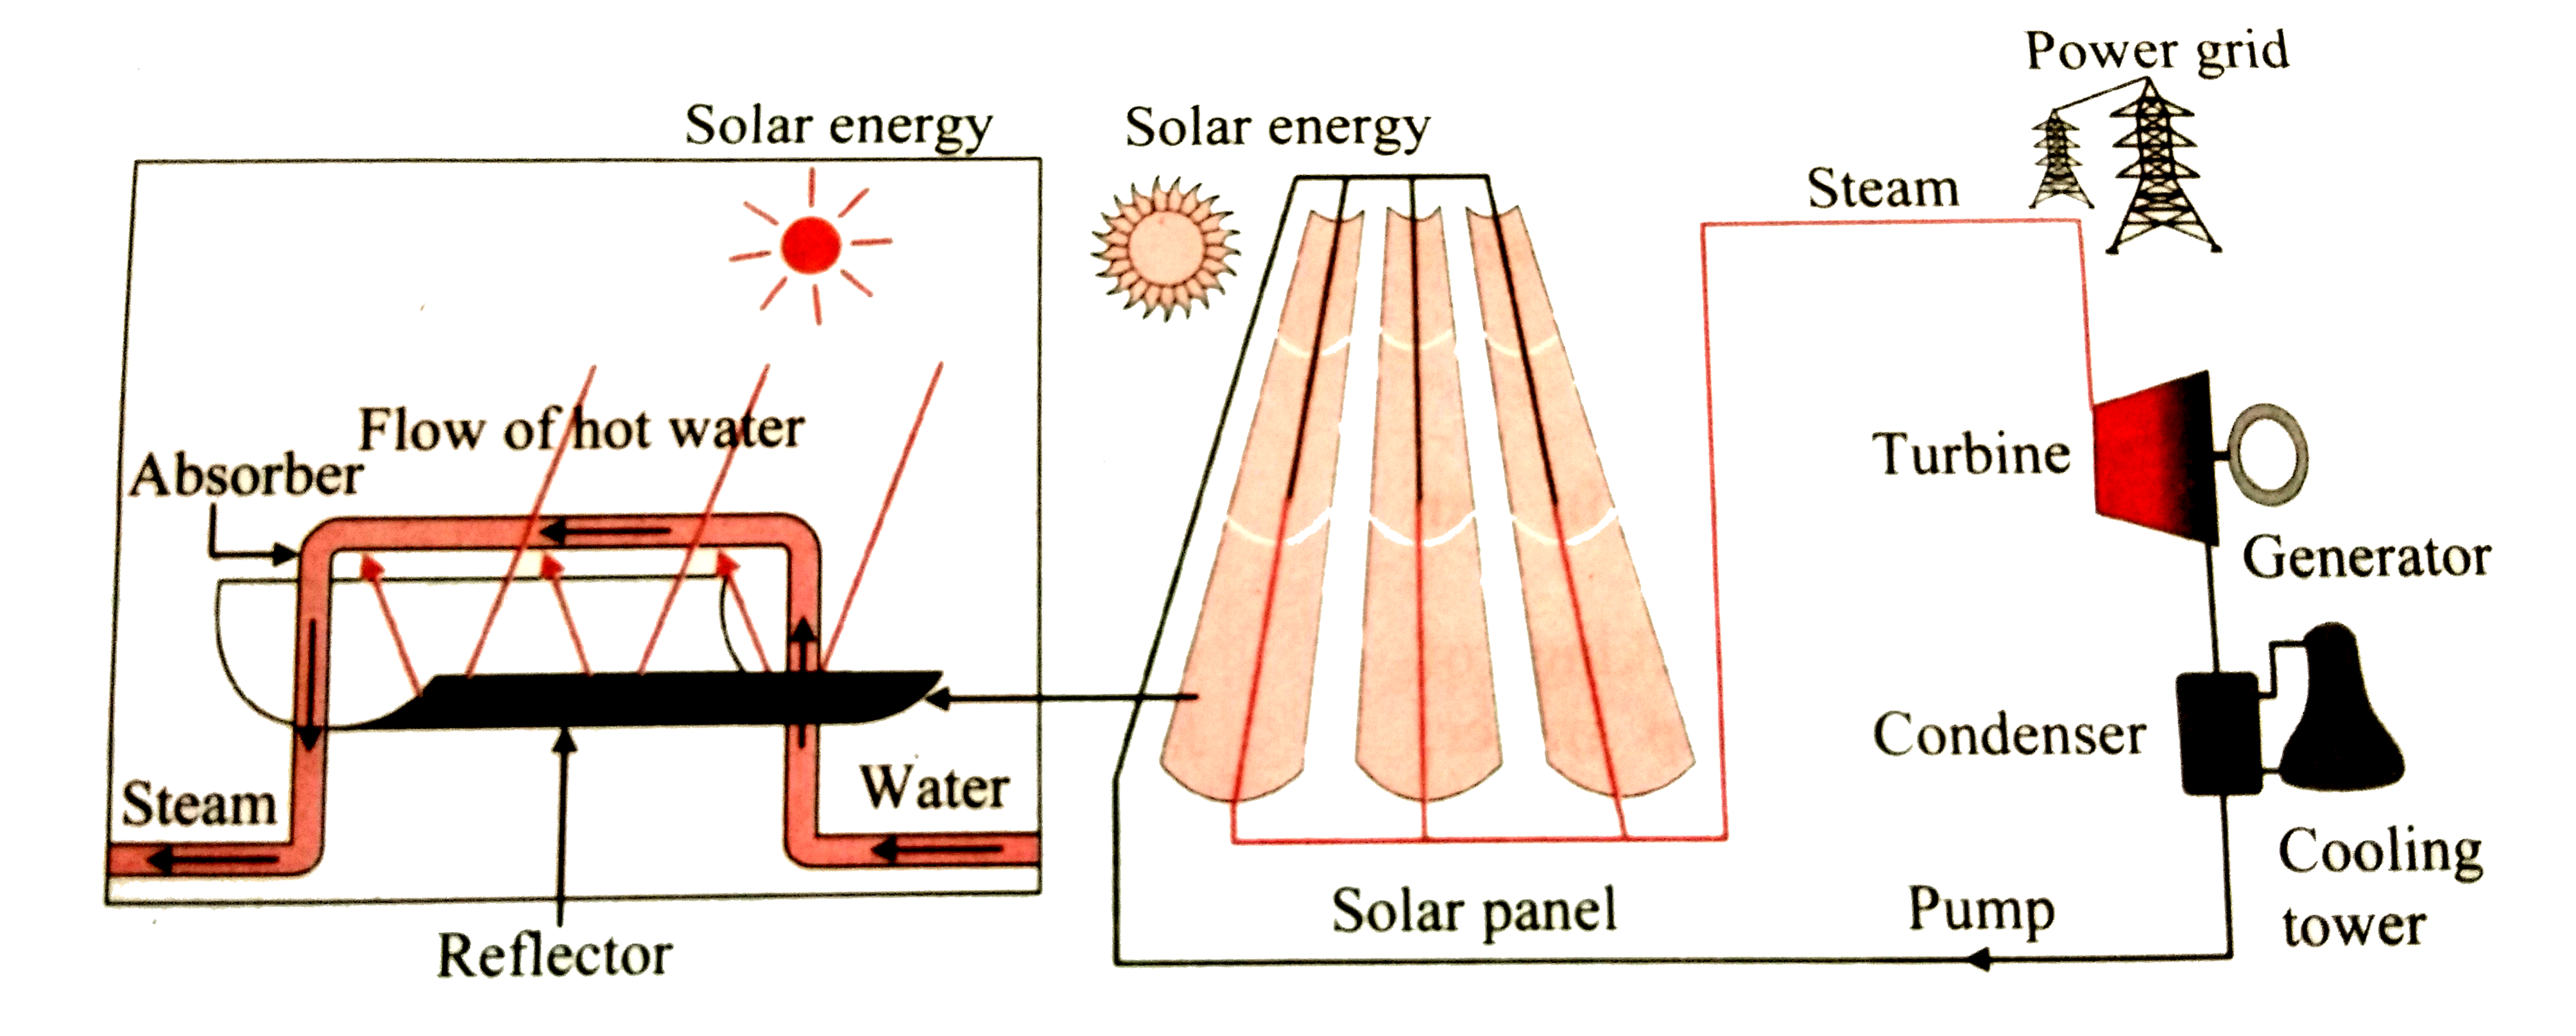 Solar power diagram Vectors & Illustrations for Free Download | Freepik